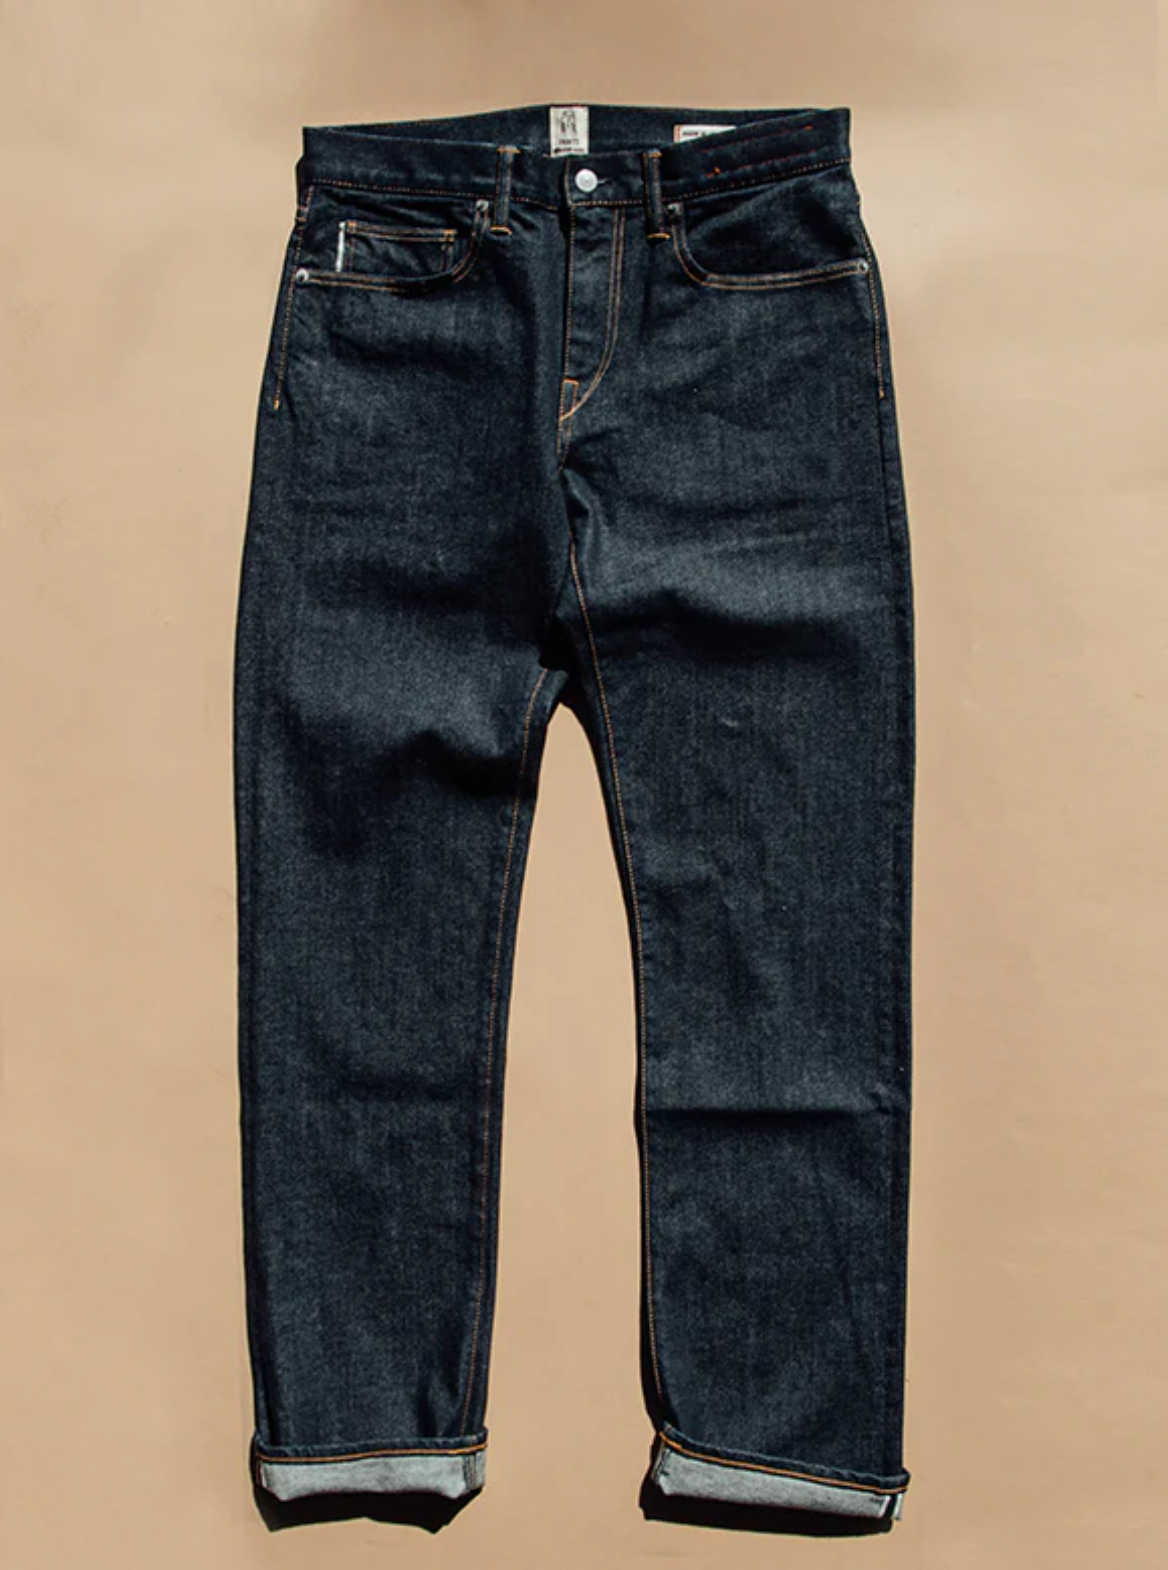 Kato - The Hammer Straight 10.5 Oz Denim Jeans One Wash-Men's Denim-30-Yaletown-Vancouver-Surrey-Canada